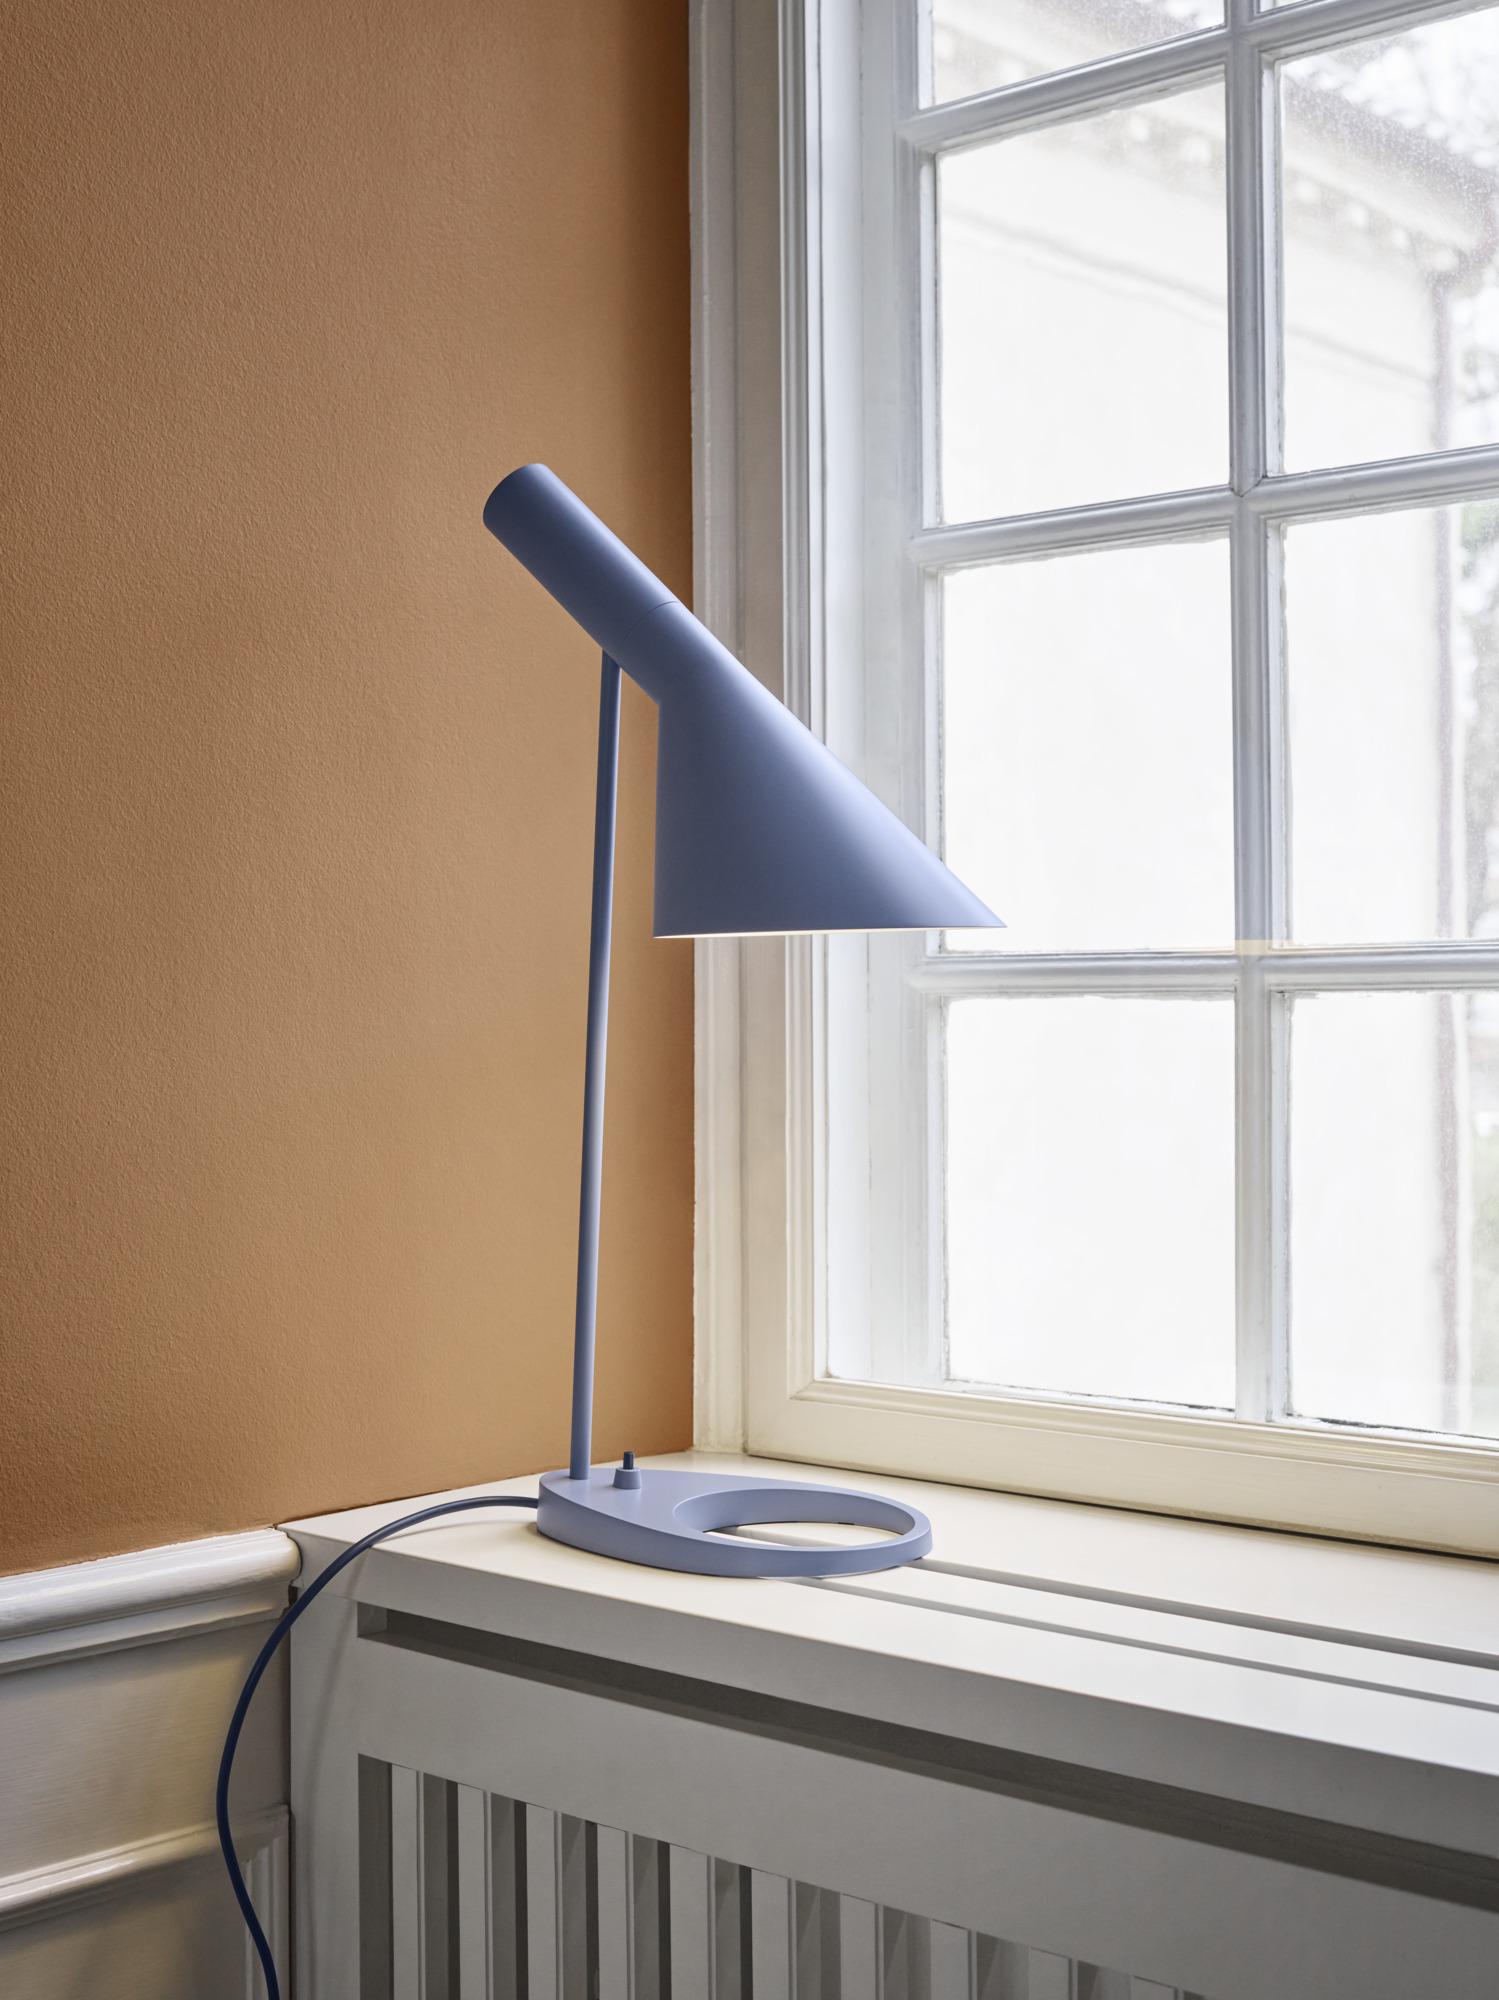 Arne Jacobsen AJ Table Lamp in Stainless Steel for Louis Poulsen For Sale 1